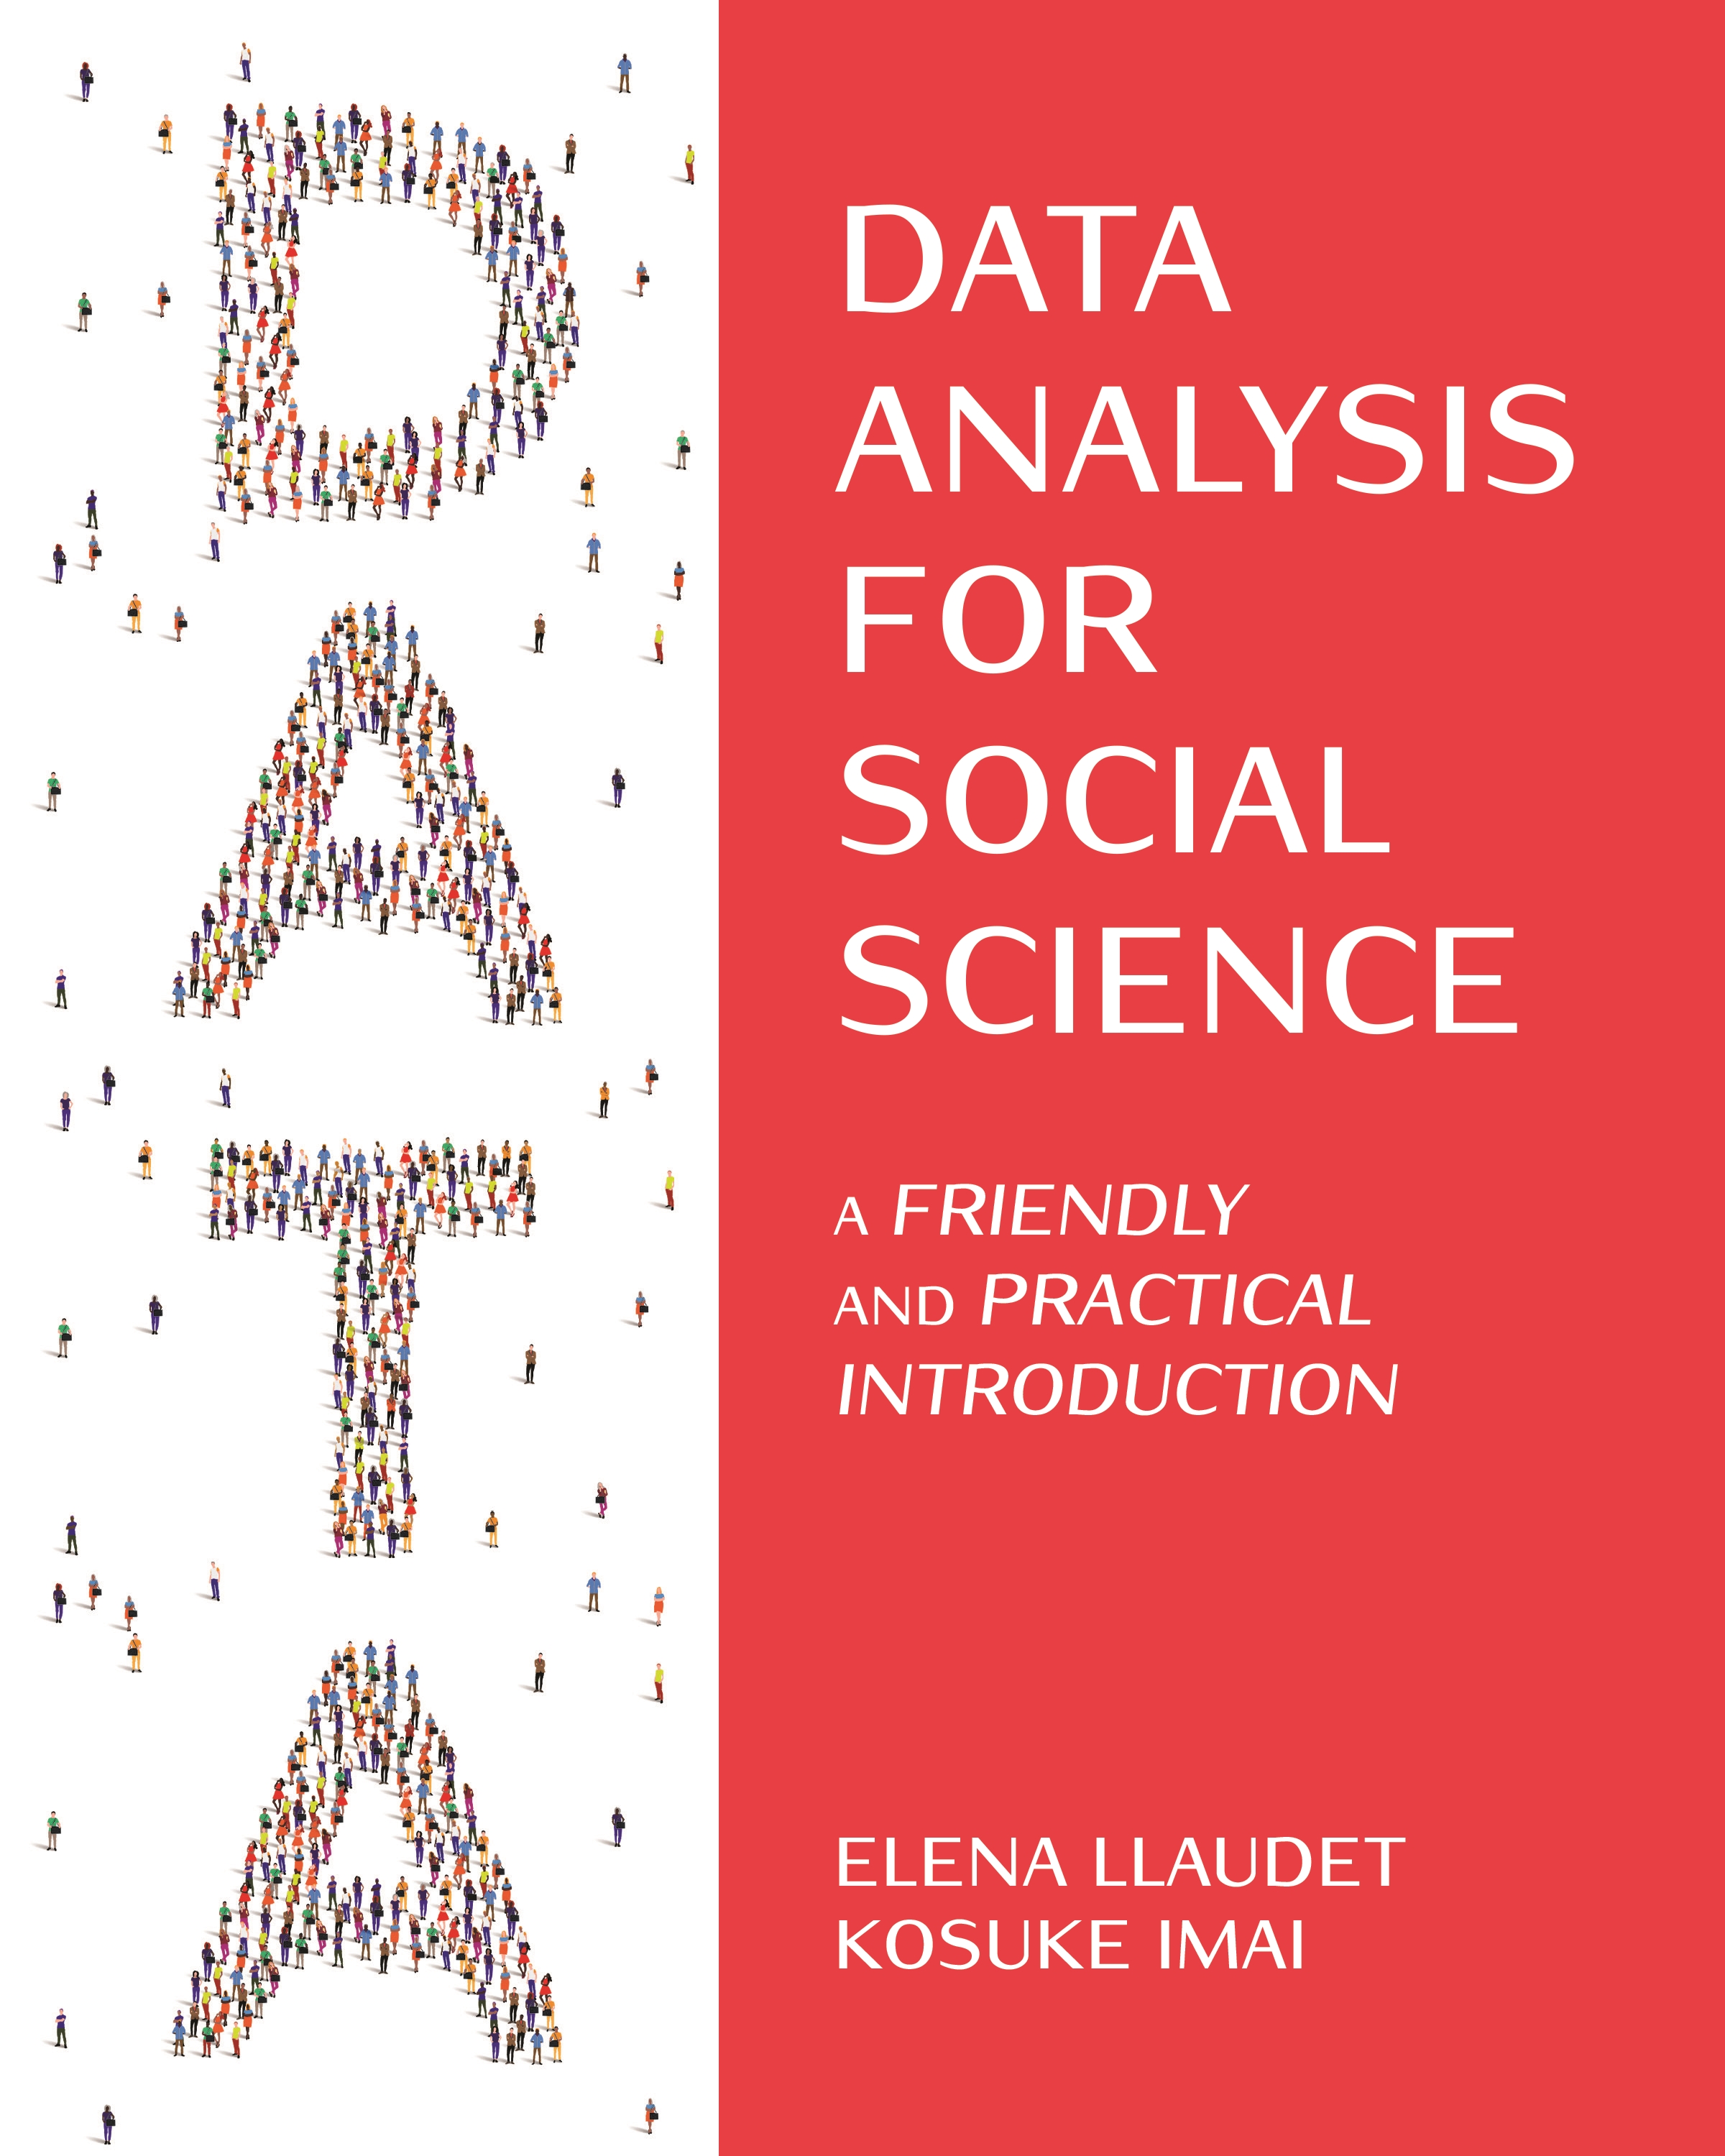 for　Princeton　Data　Social　University　Analysis　Science　Press